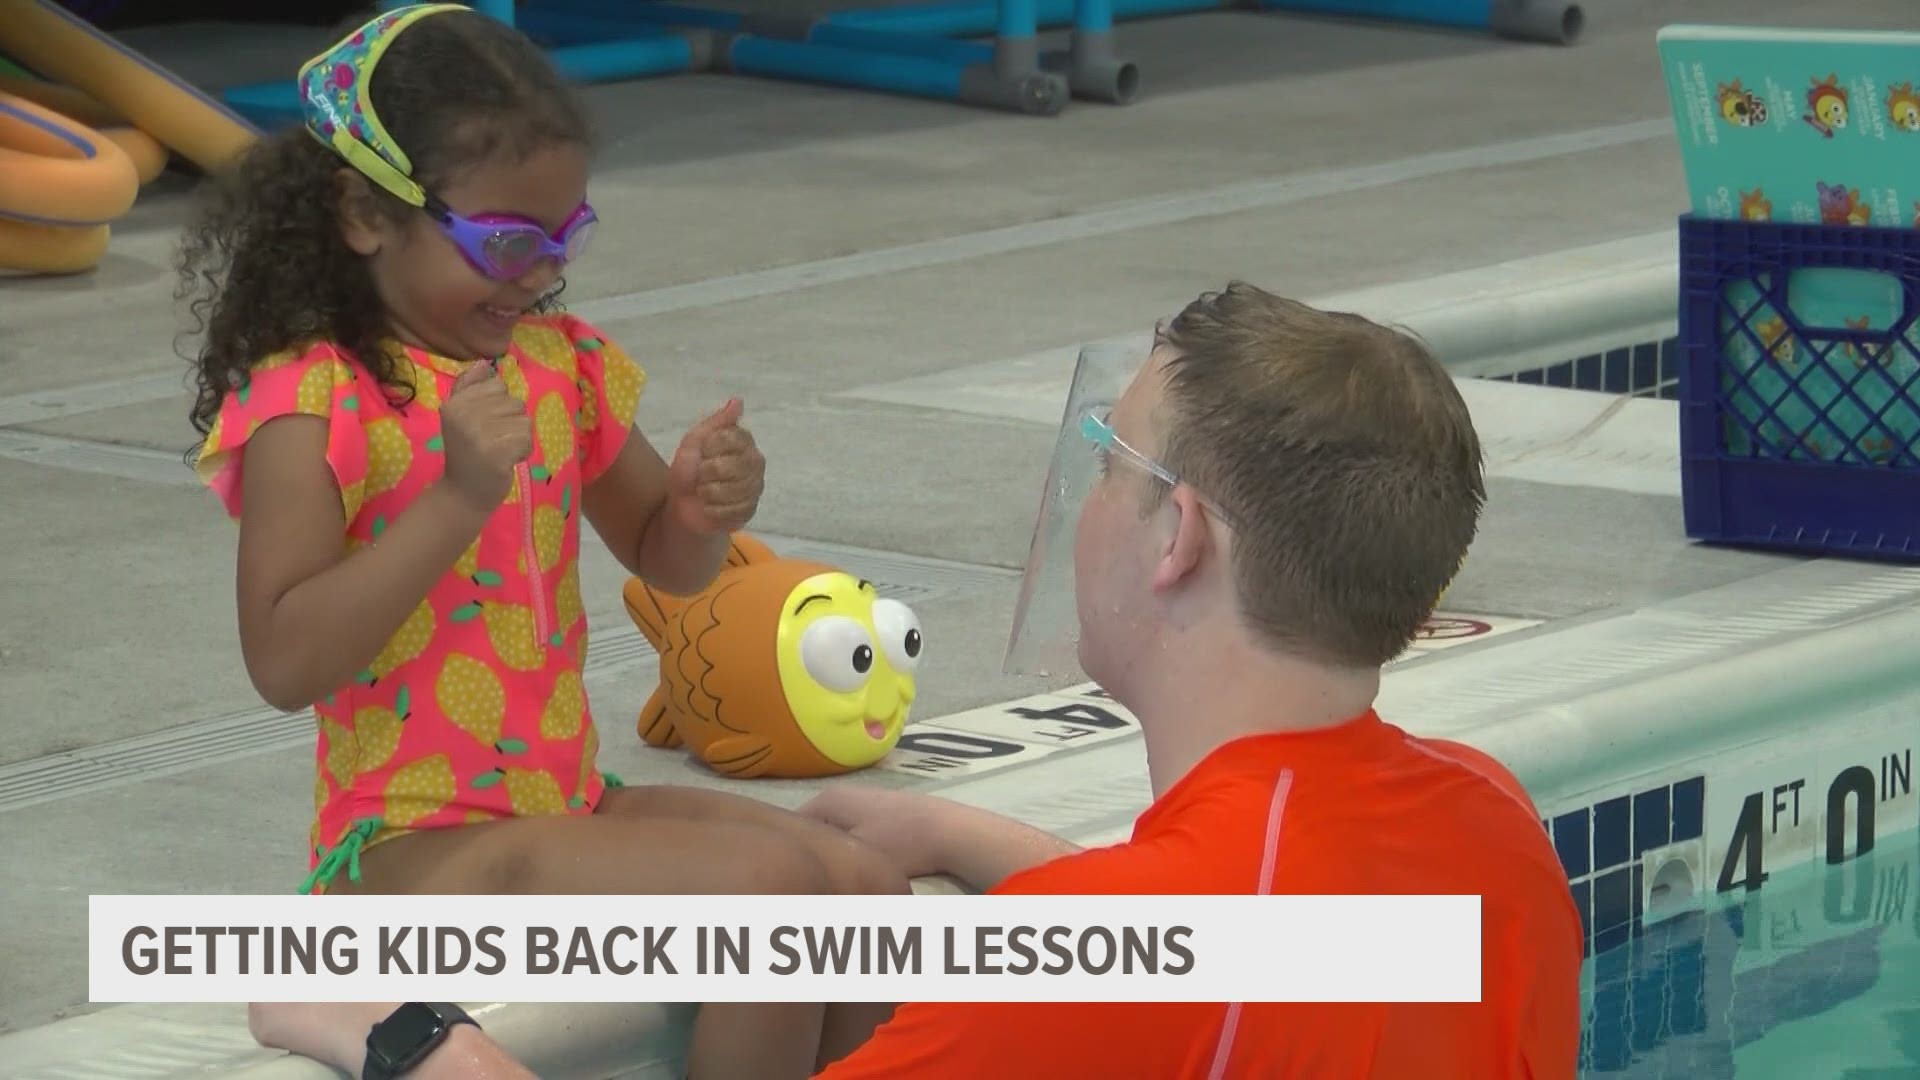 Goldfish Swim School in Urbandale is teaching kids basic swimming skills as families make their return to the water.